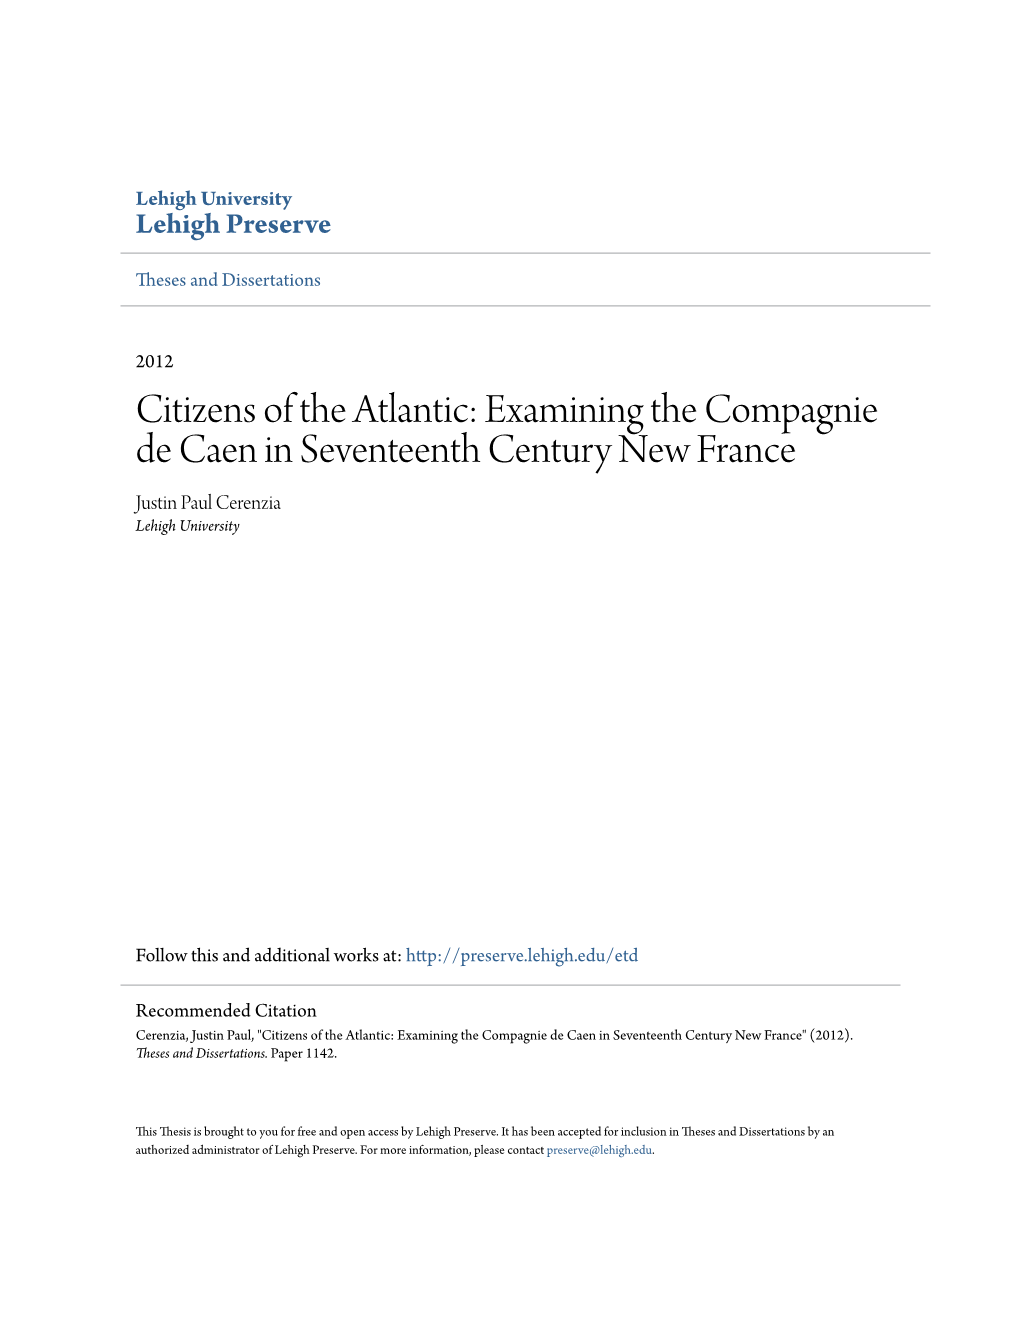 Examining the Compagnie De Caen in Seventeenth Century New France Justin Paul Cerenzia Lehigh University